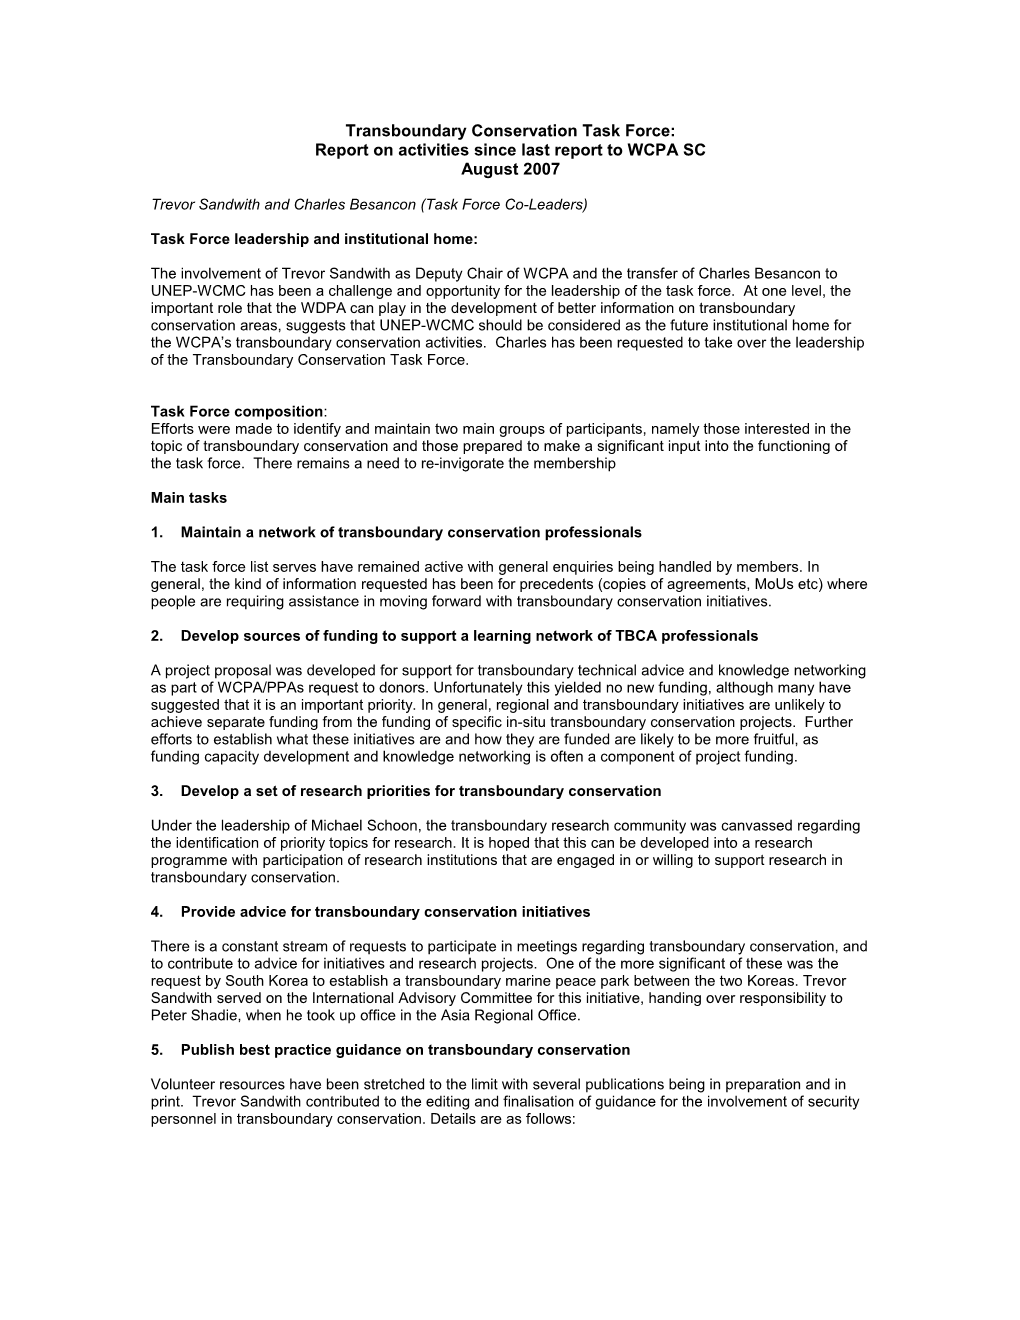 Categories Task Force: Report on Activities Since Last WCPA Steering Committee Meeting